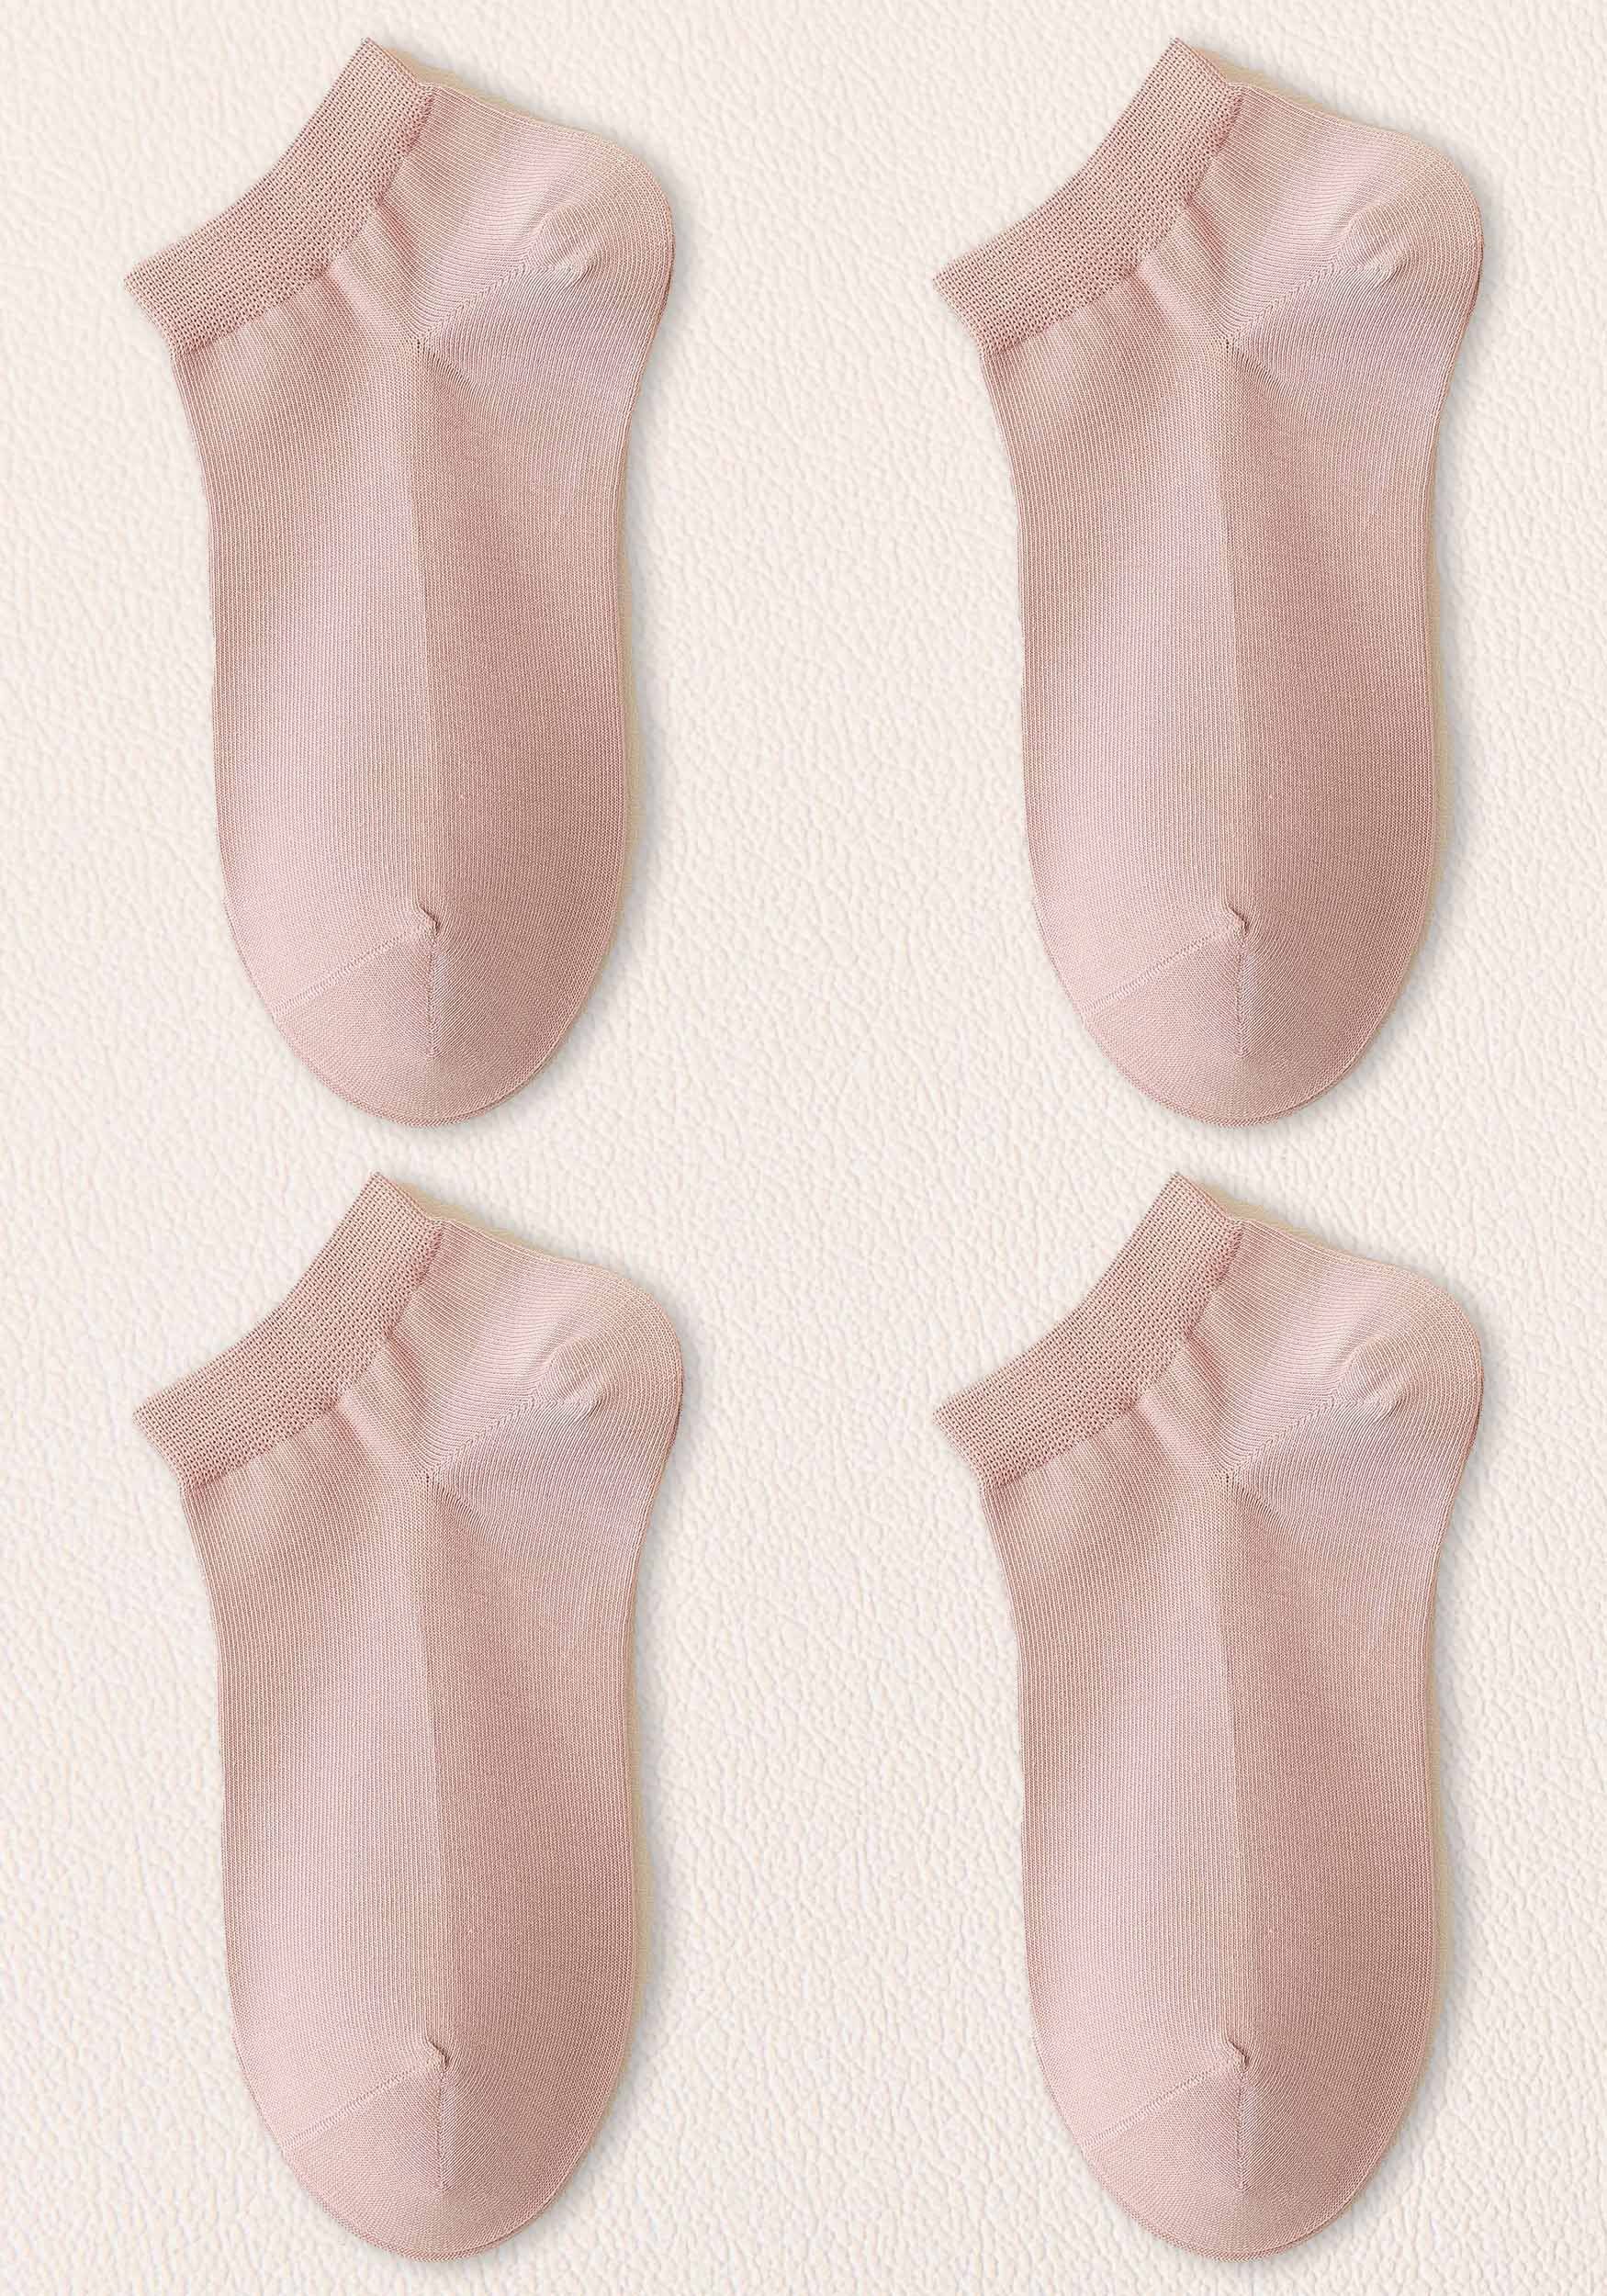 MAGICSHE Freizeitsocken Damen Socken– warm, atmungsaktiv,lange haltbar, kein Verrutschen (4-Paar) Invisible Socken bequem Sneakersocken Rosa